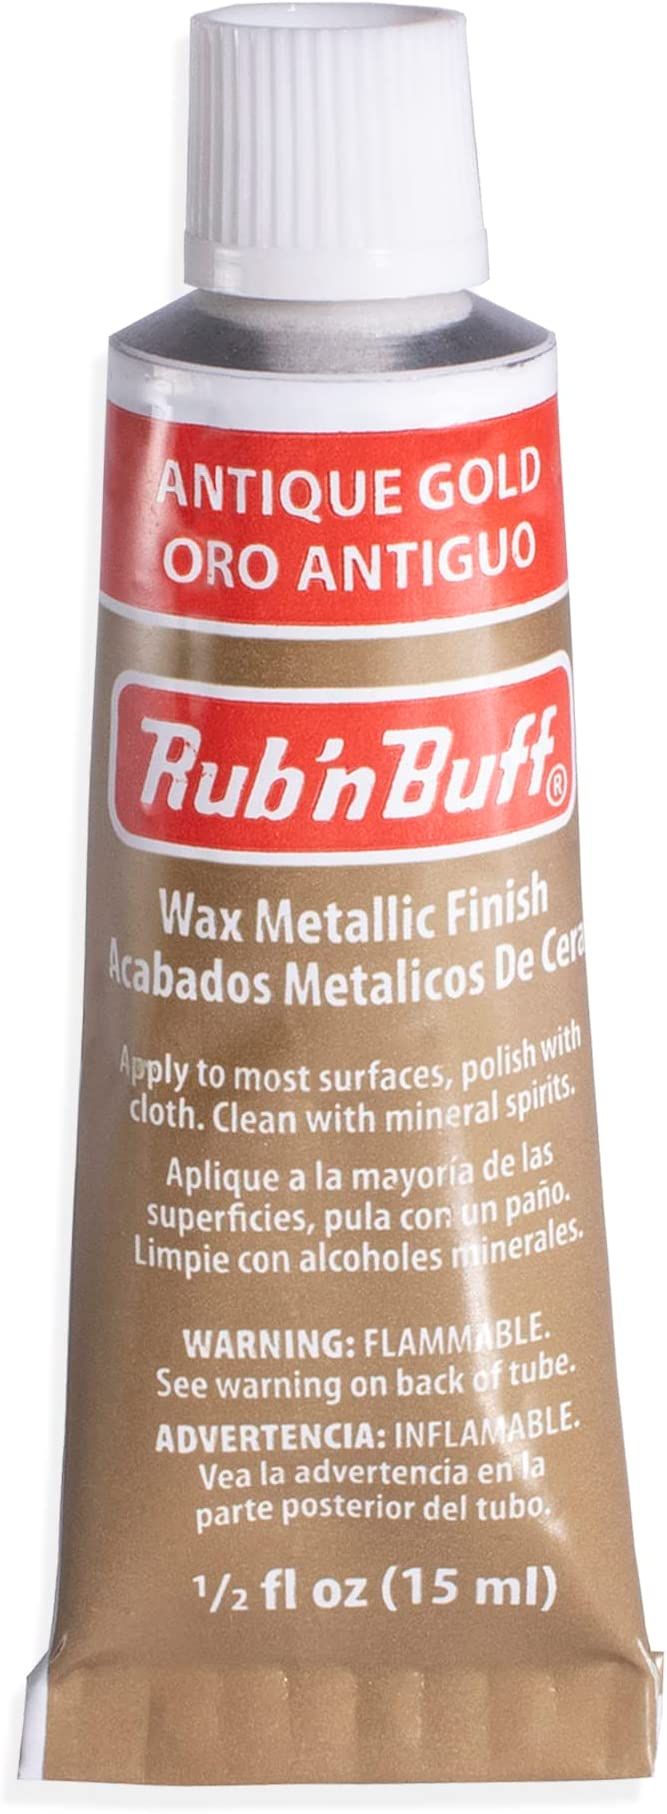 AMACO Rub n Buff Wax Metallic Finish - Rub n Buff Antique Gold 15ml Tube - Versatile Gilding Wax ... | Amazon (US)